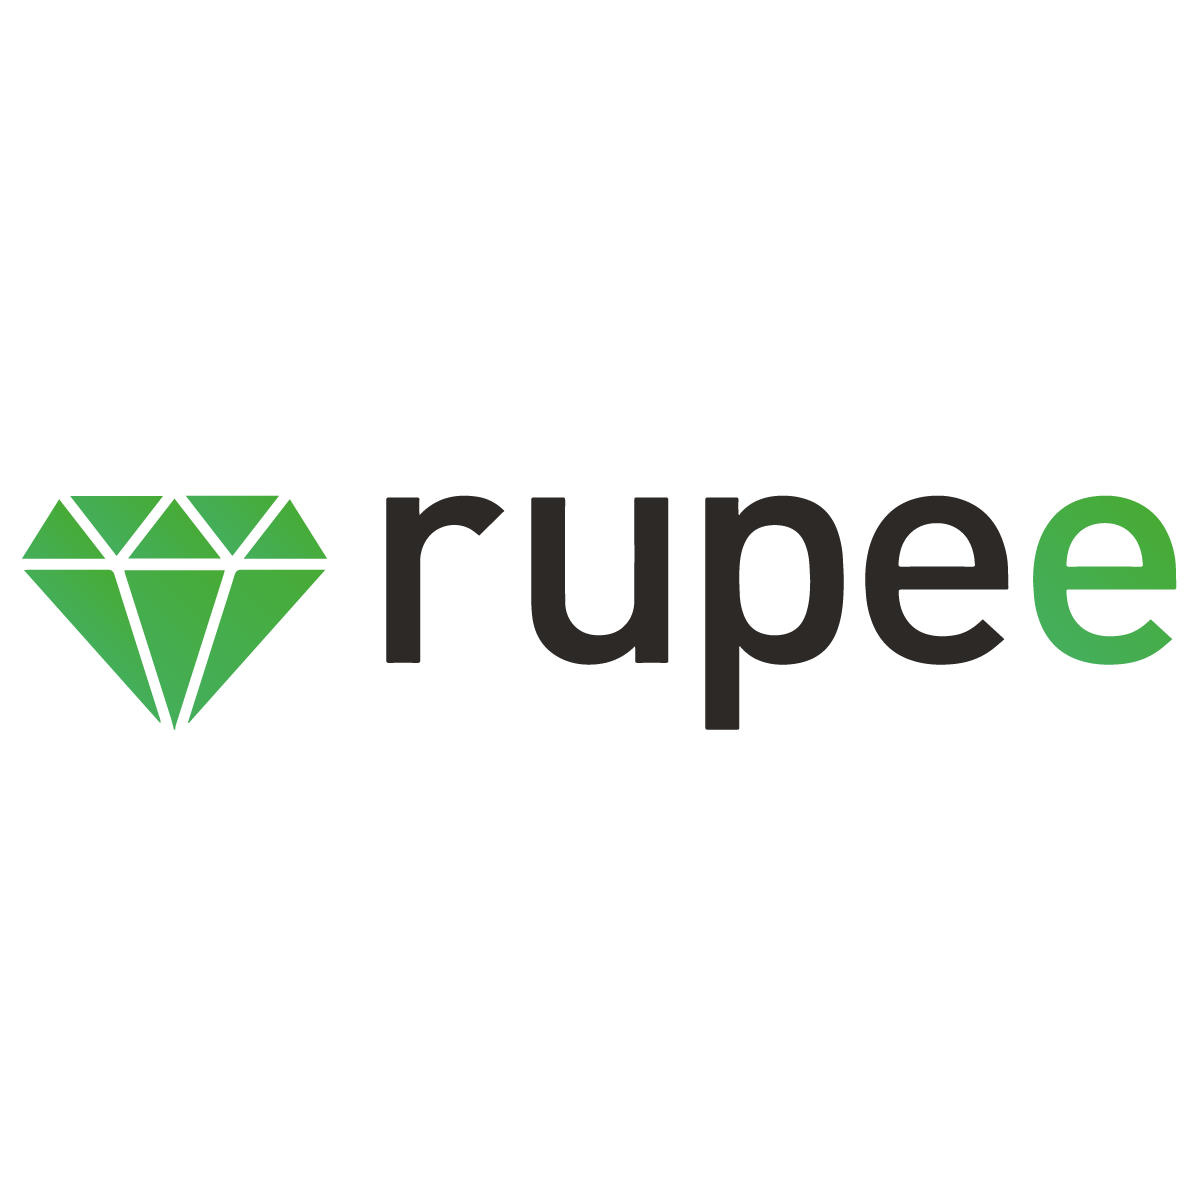 Rupee Solutions